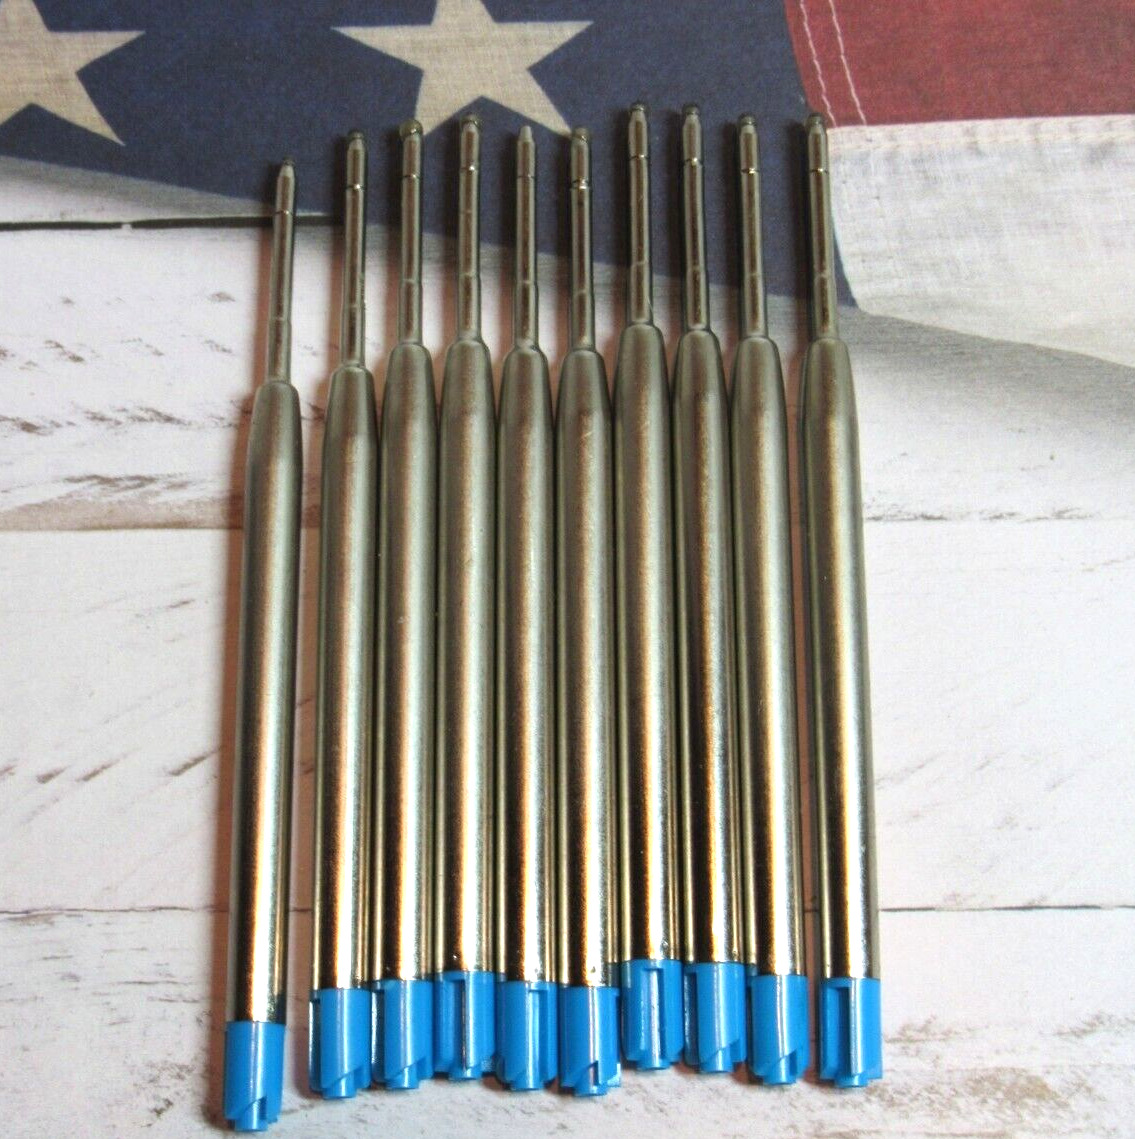 10 BLUE Metal Ballpoint Pen Ink Refills Medium Point Parker Style-USA seller